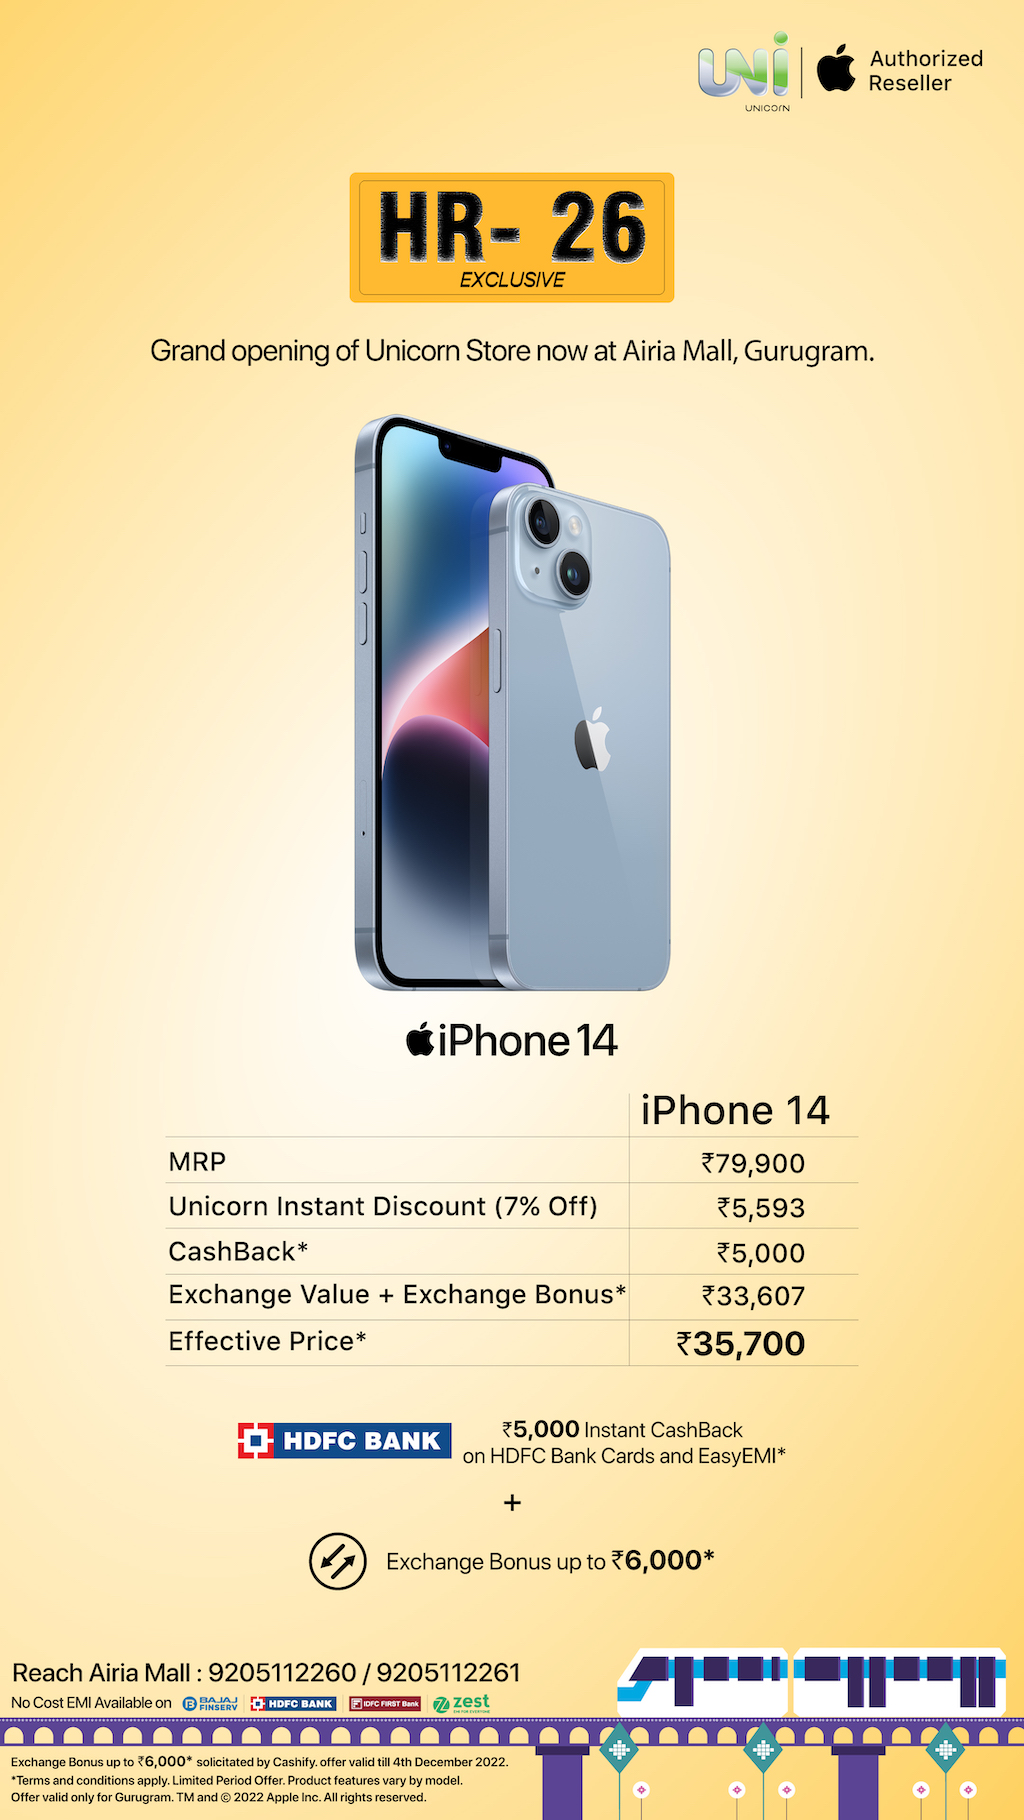 Penawaran Bumper iPhone 14: Dapatkan iPhone 14 dengan harga kurang dari Rs 55000, ketahui di mana membelinya